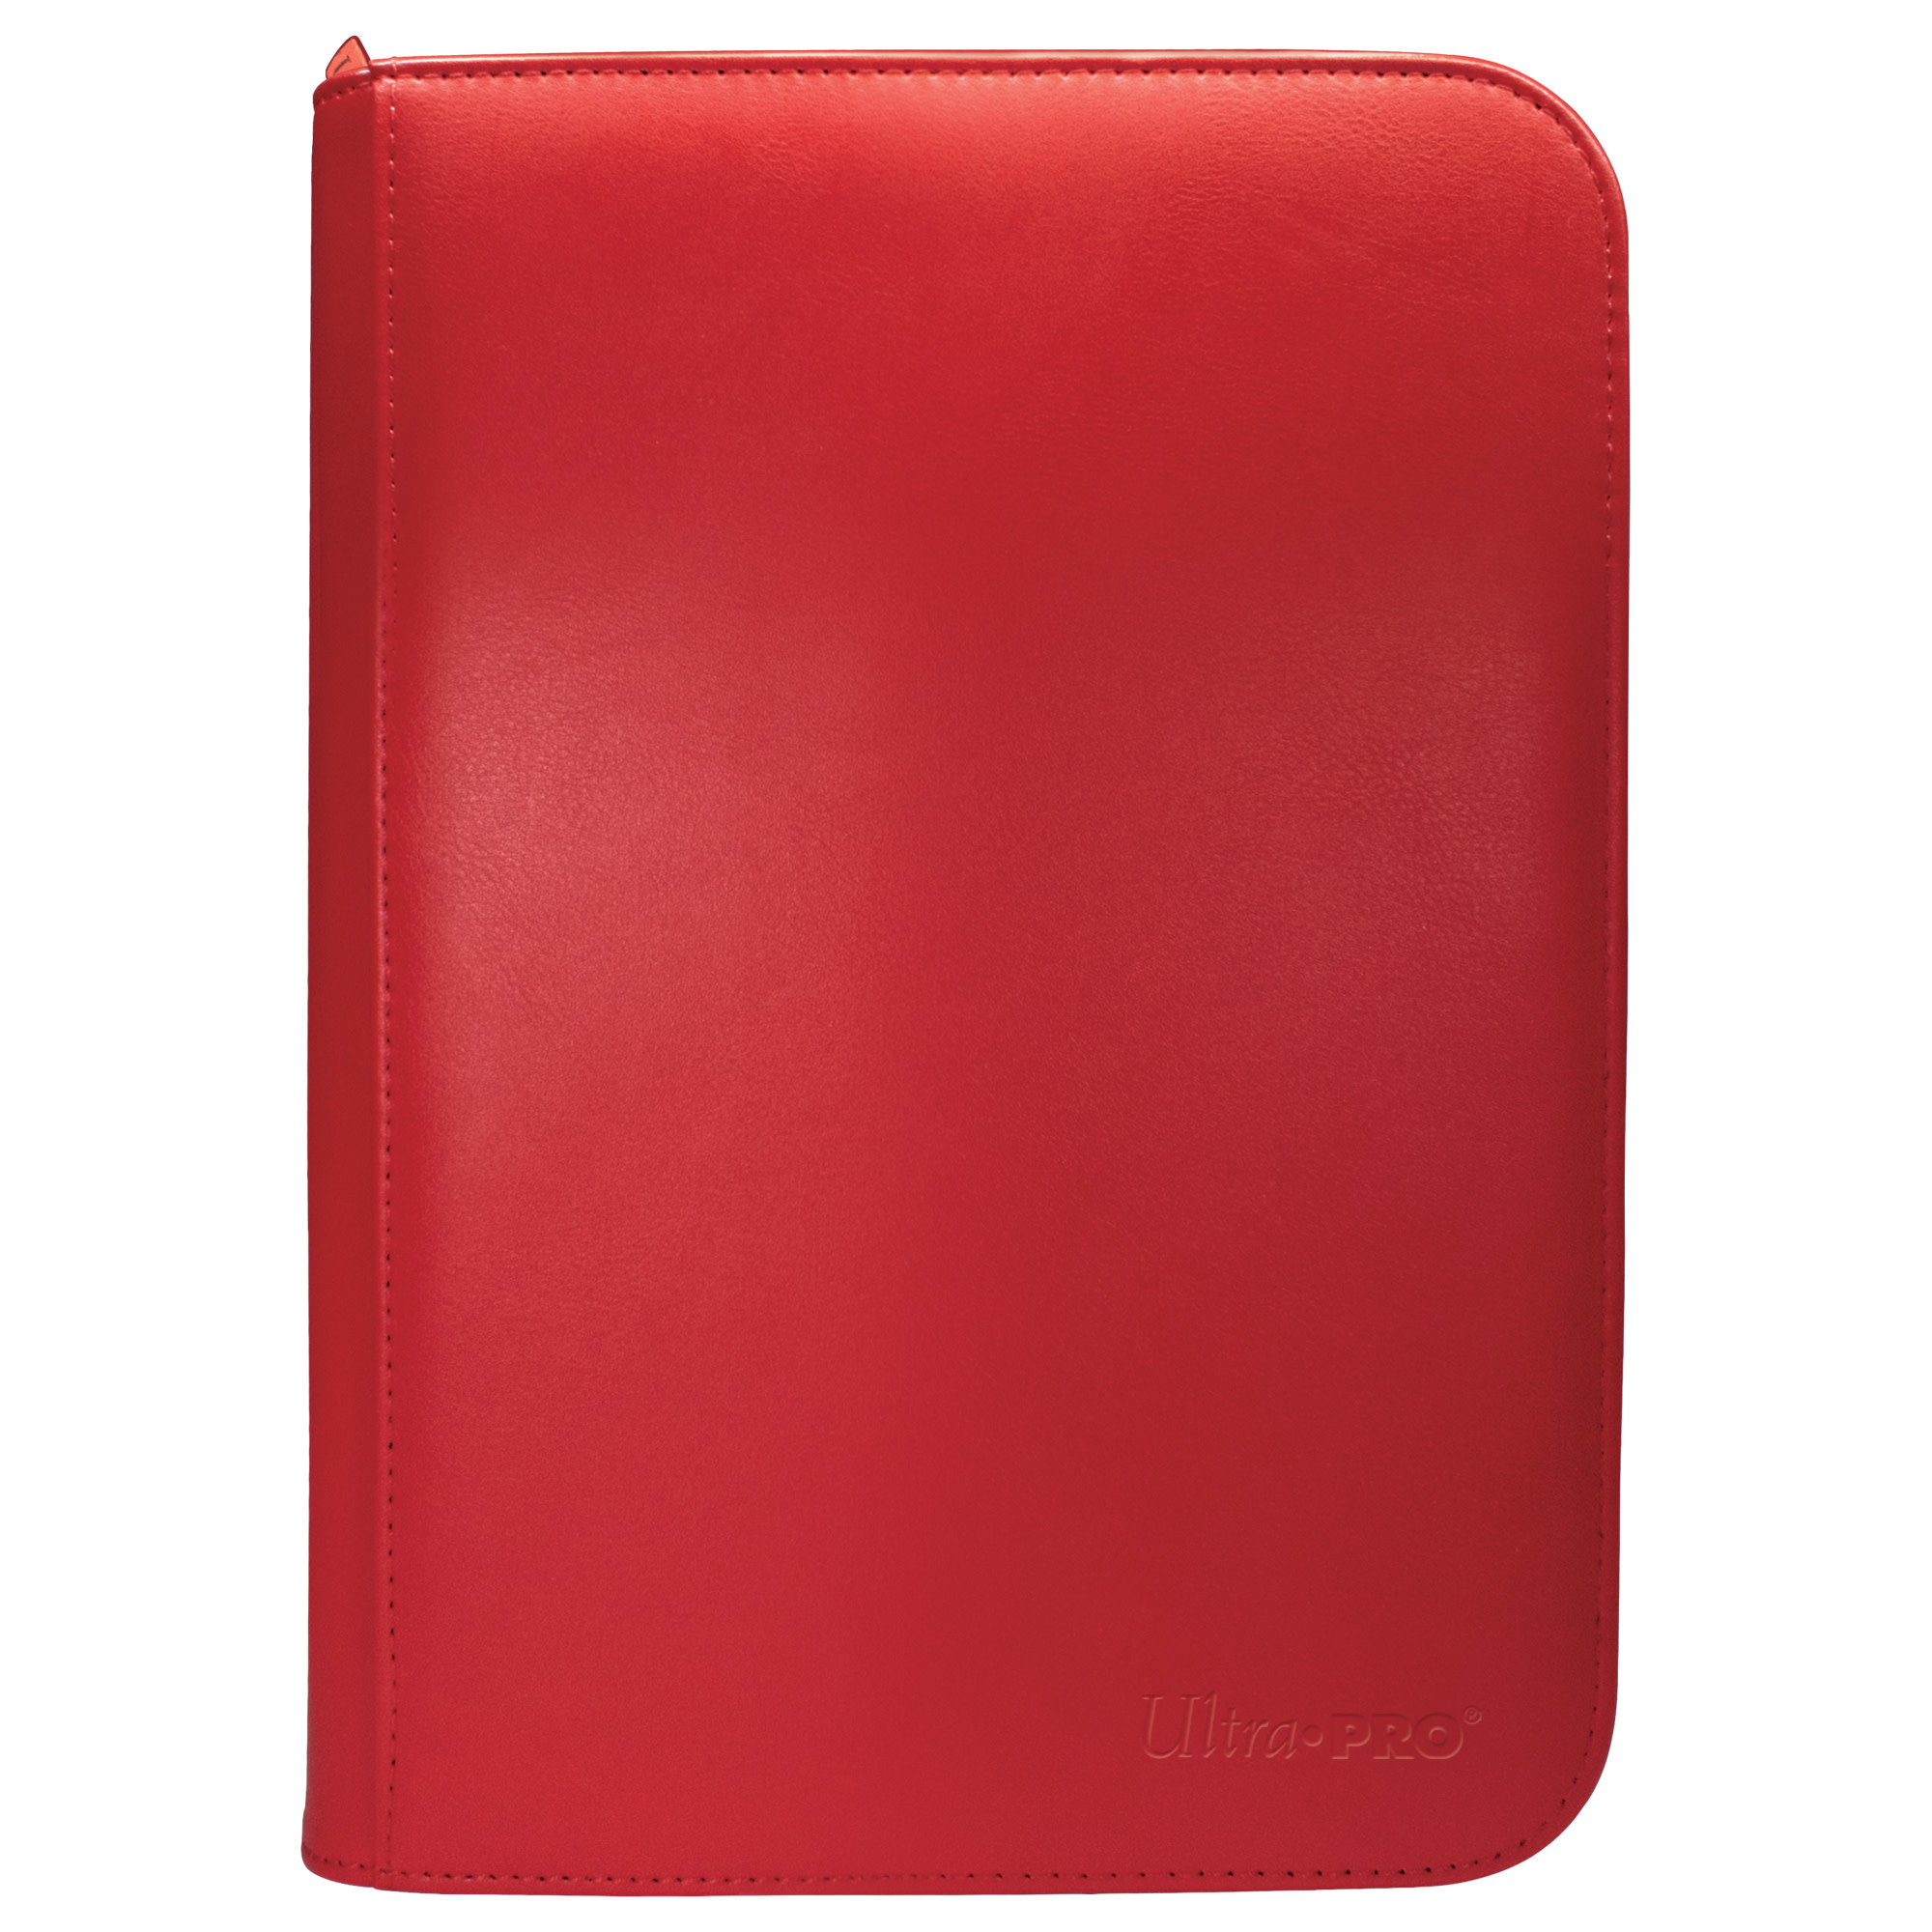 UP15895: Cartable: Zip Pro Vivid 4 Pocket: Rouge